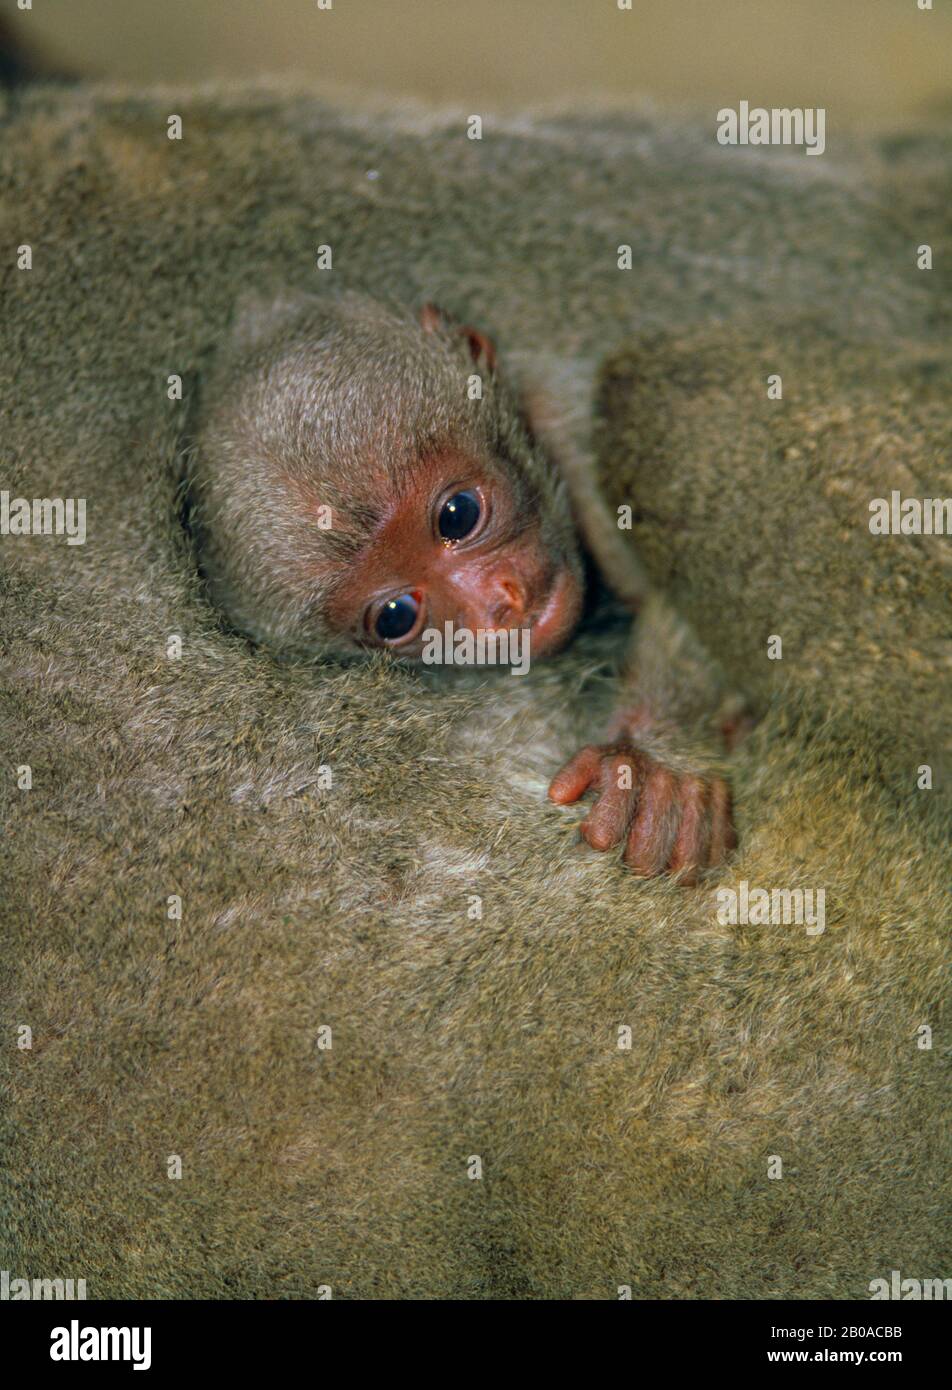 Mono de lana común, mono de lana de Humboldt, mono de lana marrón (Lagothrix lagotricha), mono bebé balbuceador, retrato Foto de stock